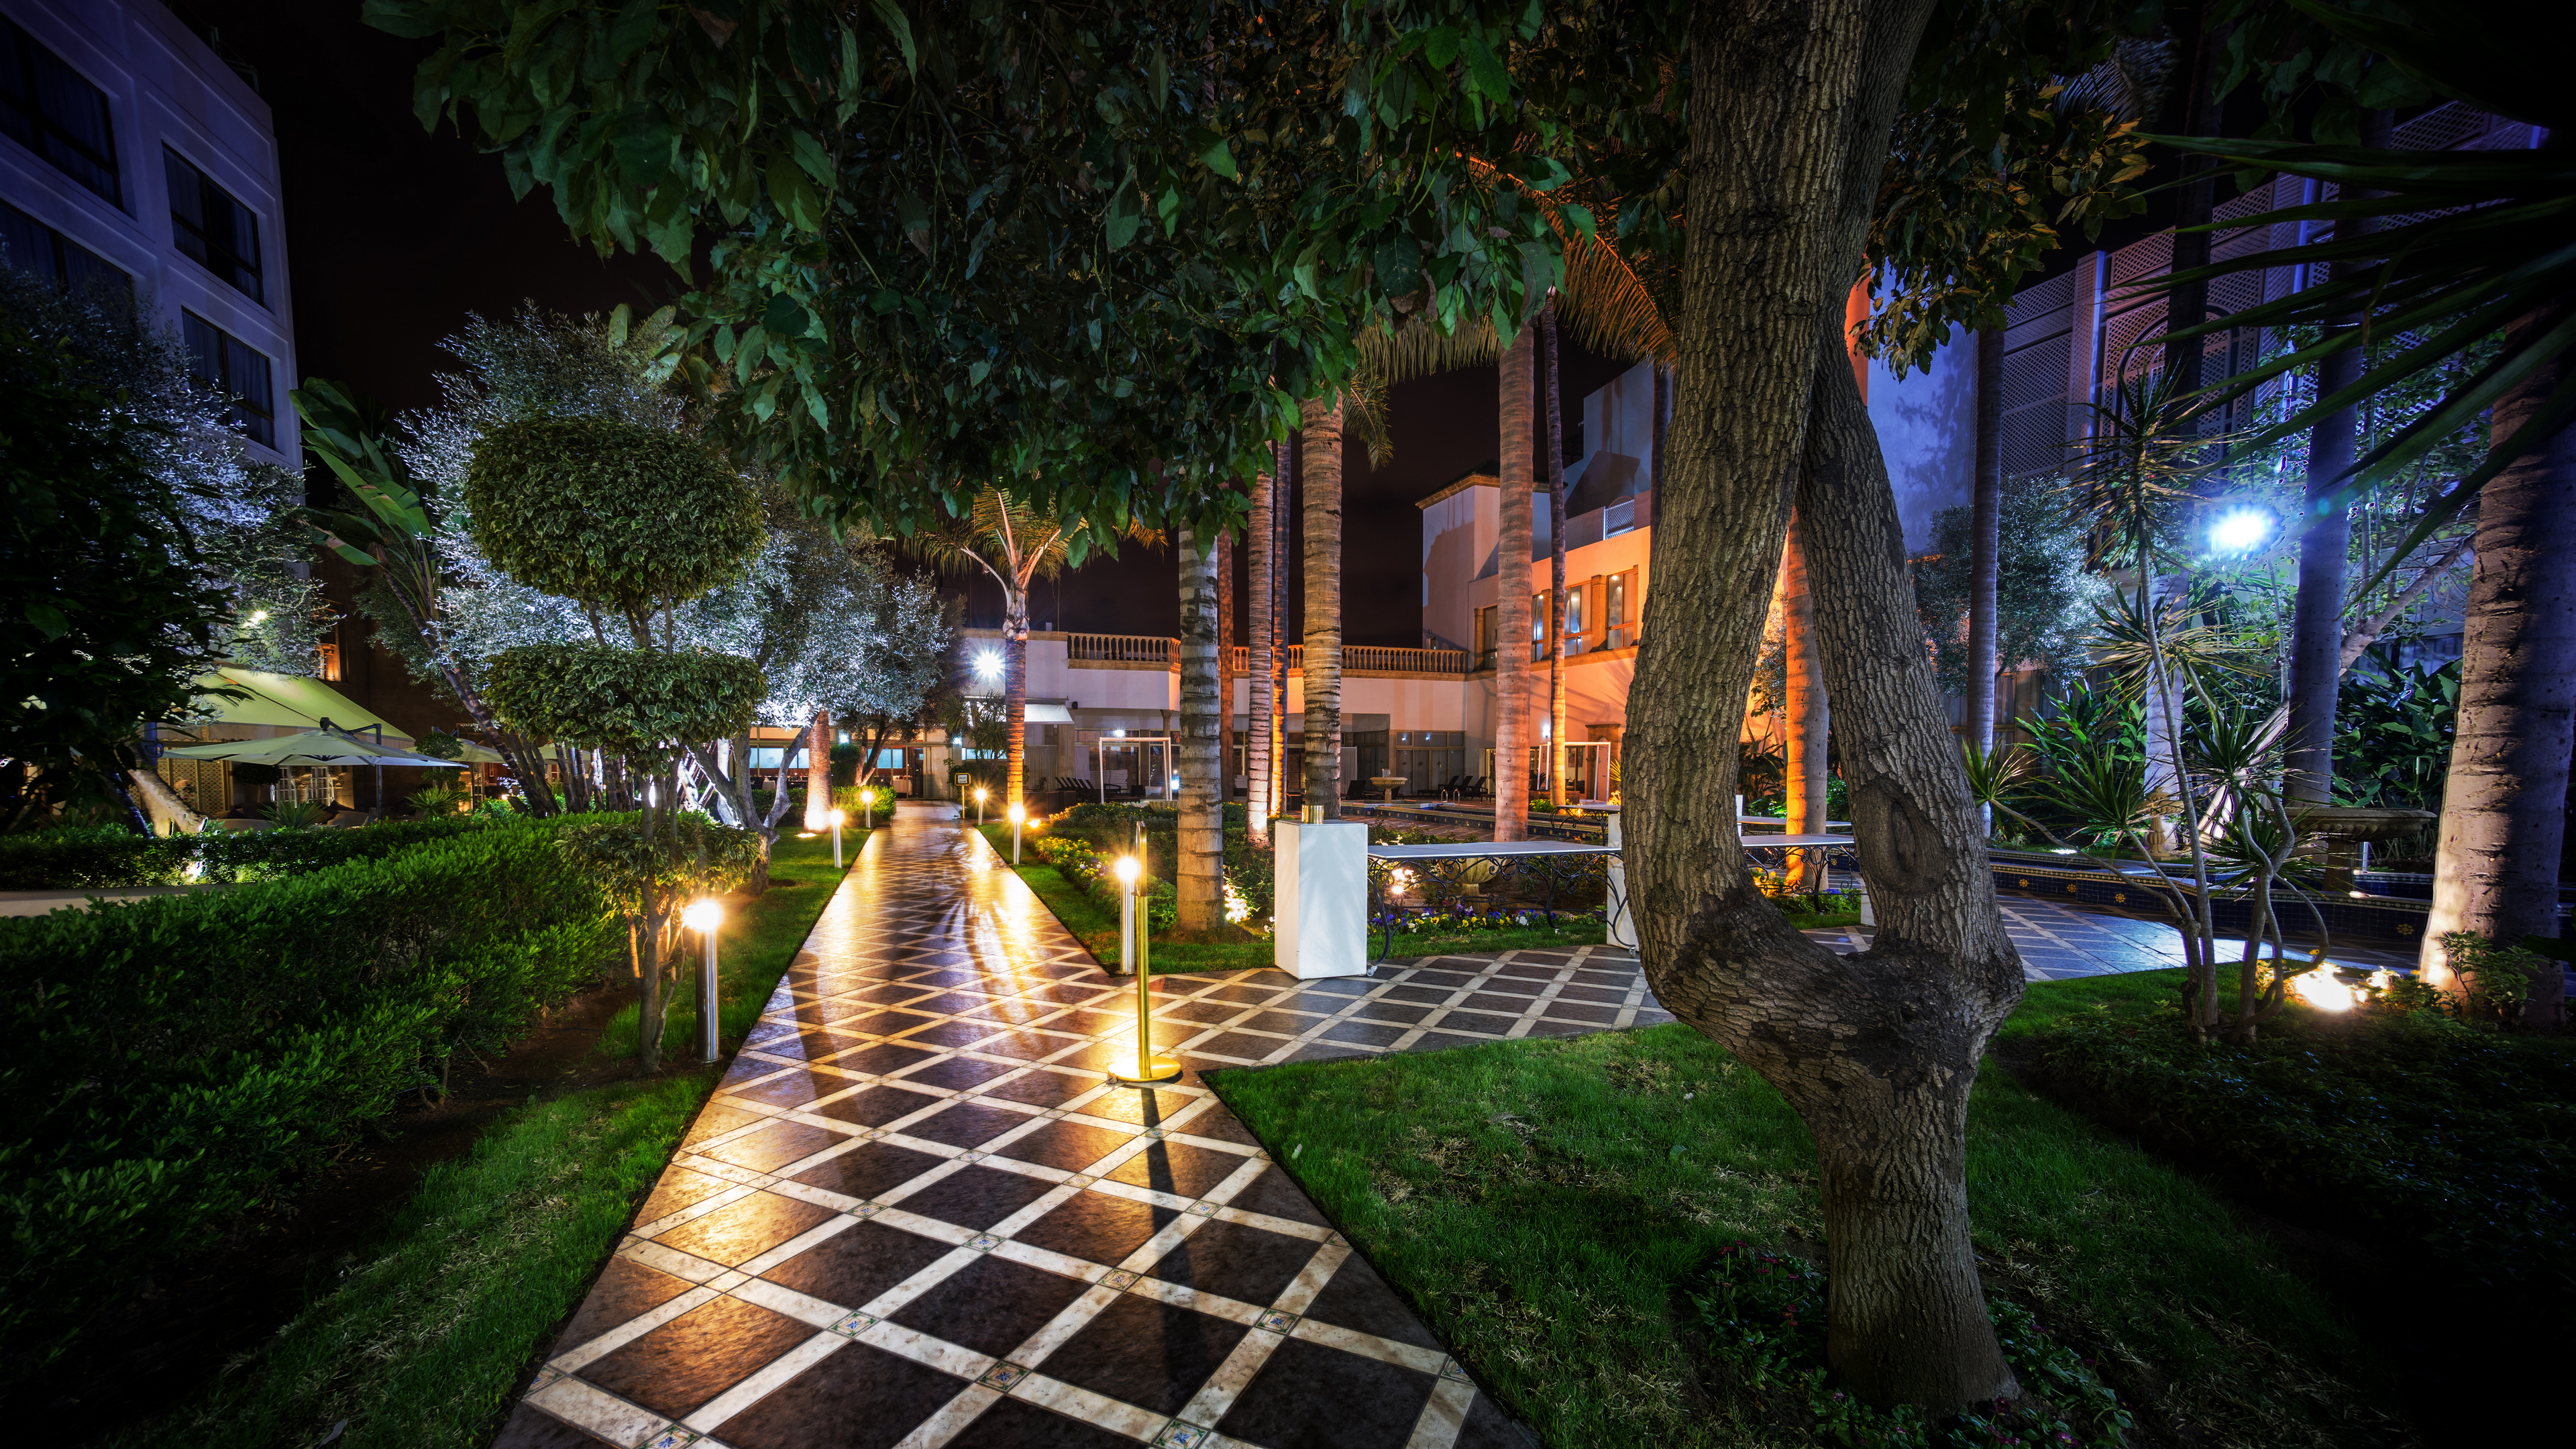 General 3840x2160 Morocco Trey Ratcliff Rabat city garden night trees lights 4K